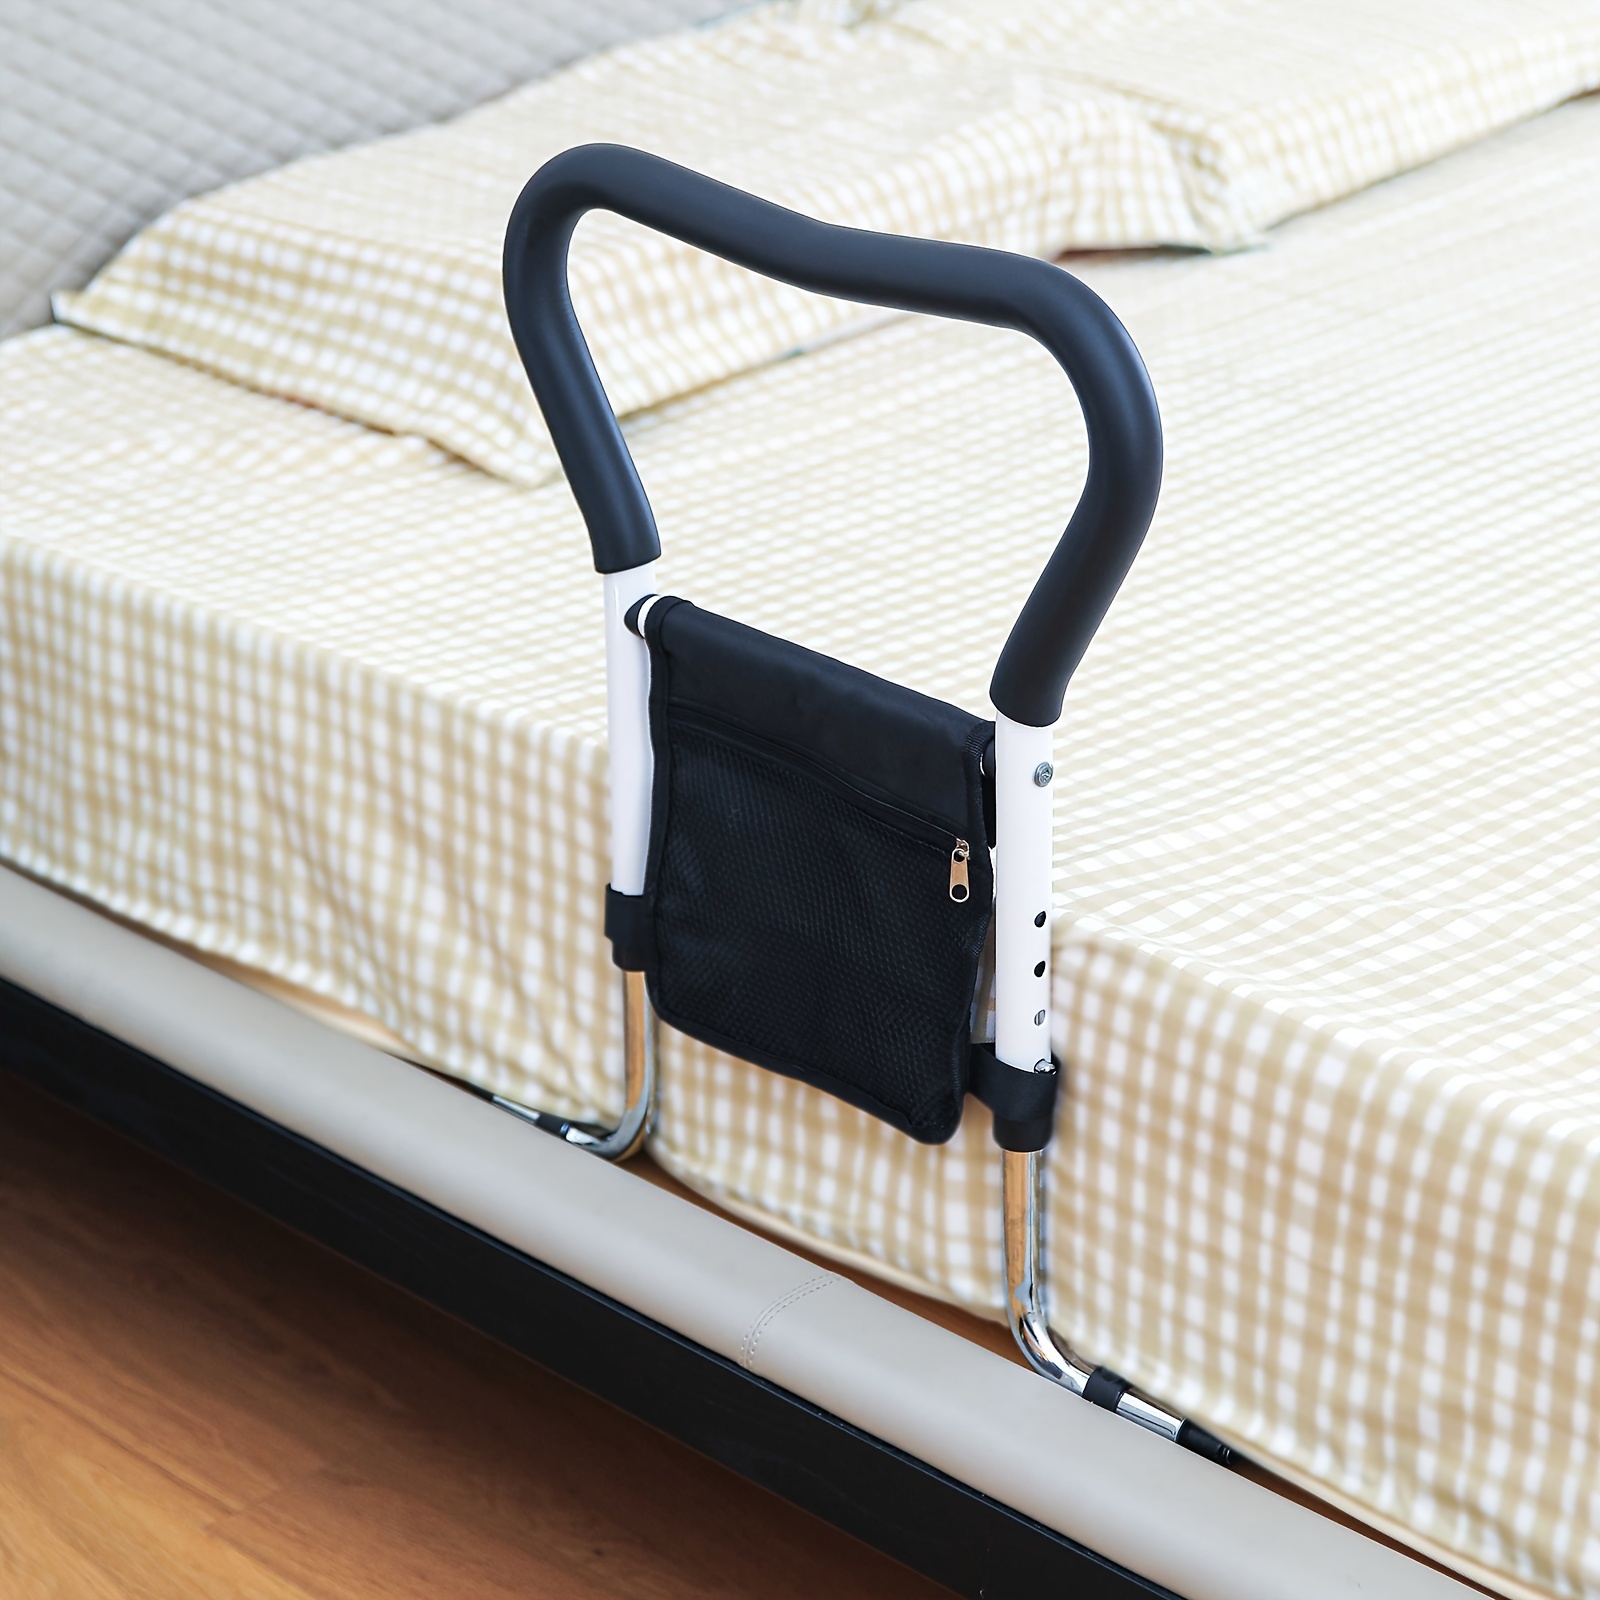 Folding Bed Rail - White - Kmart